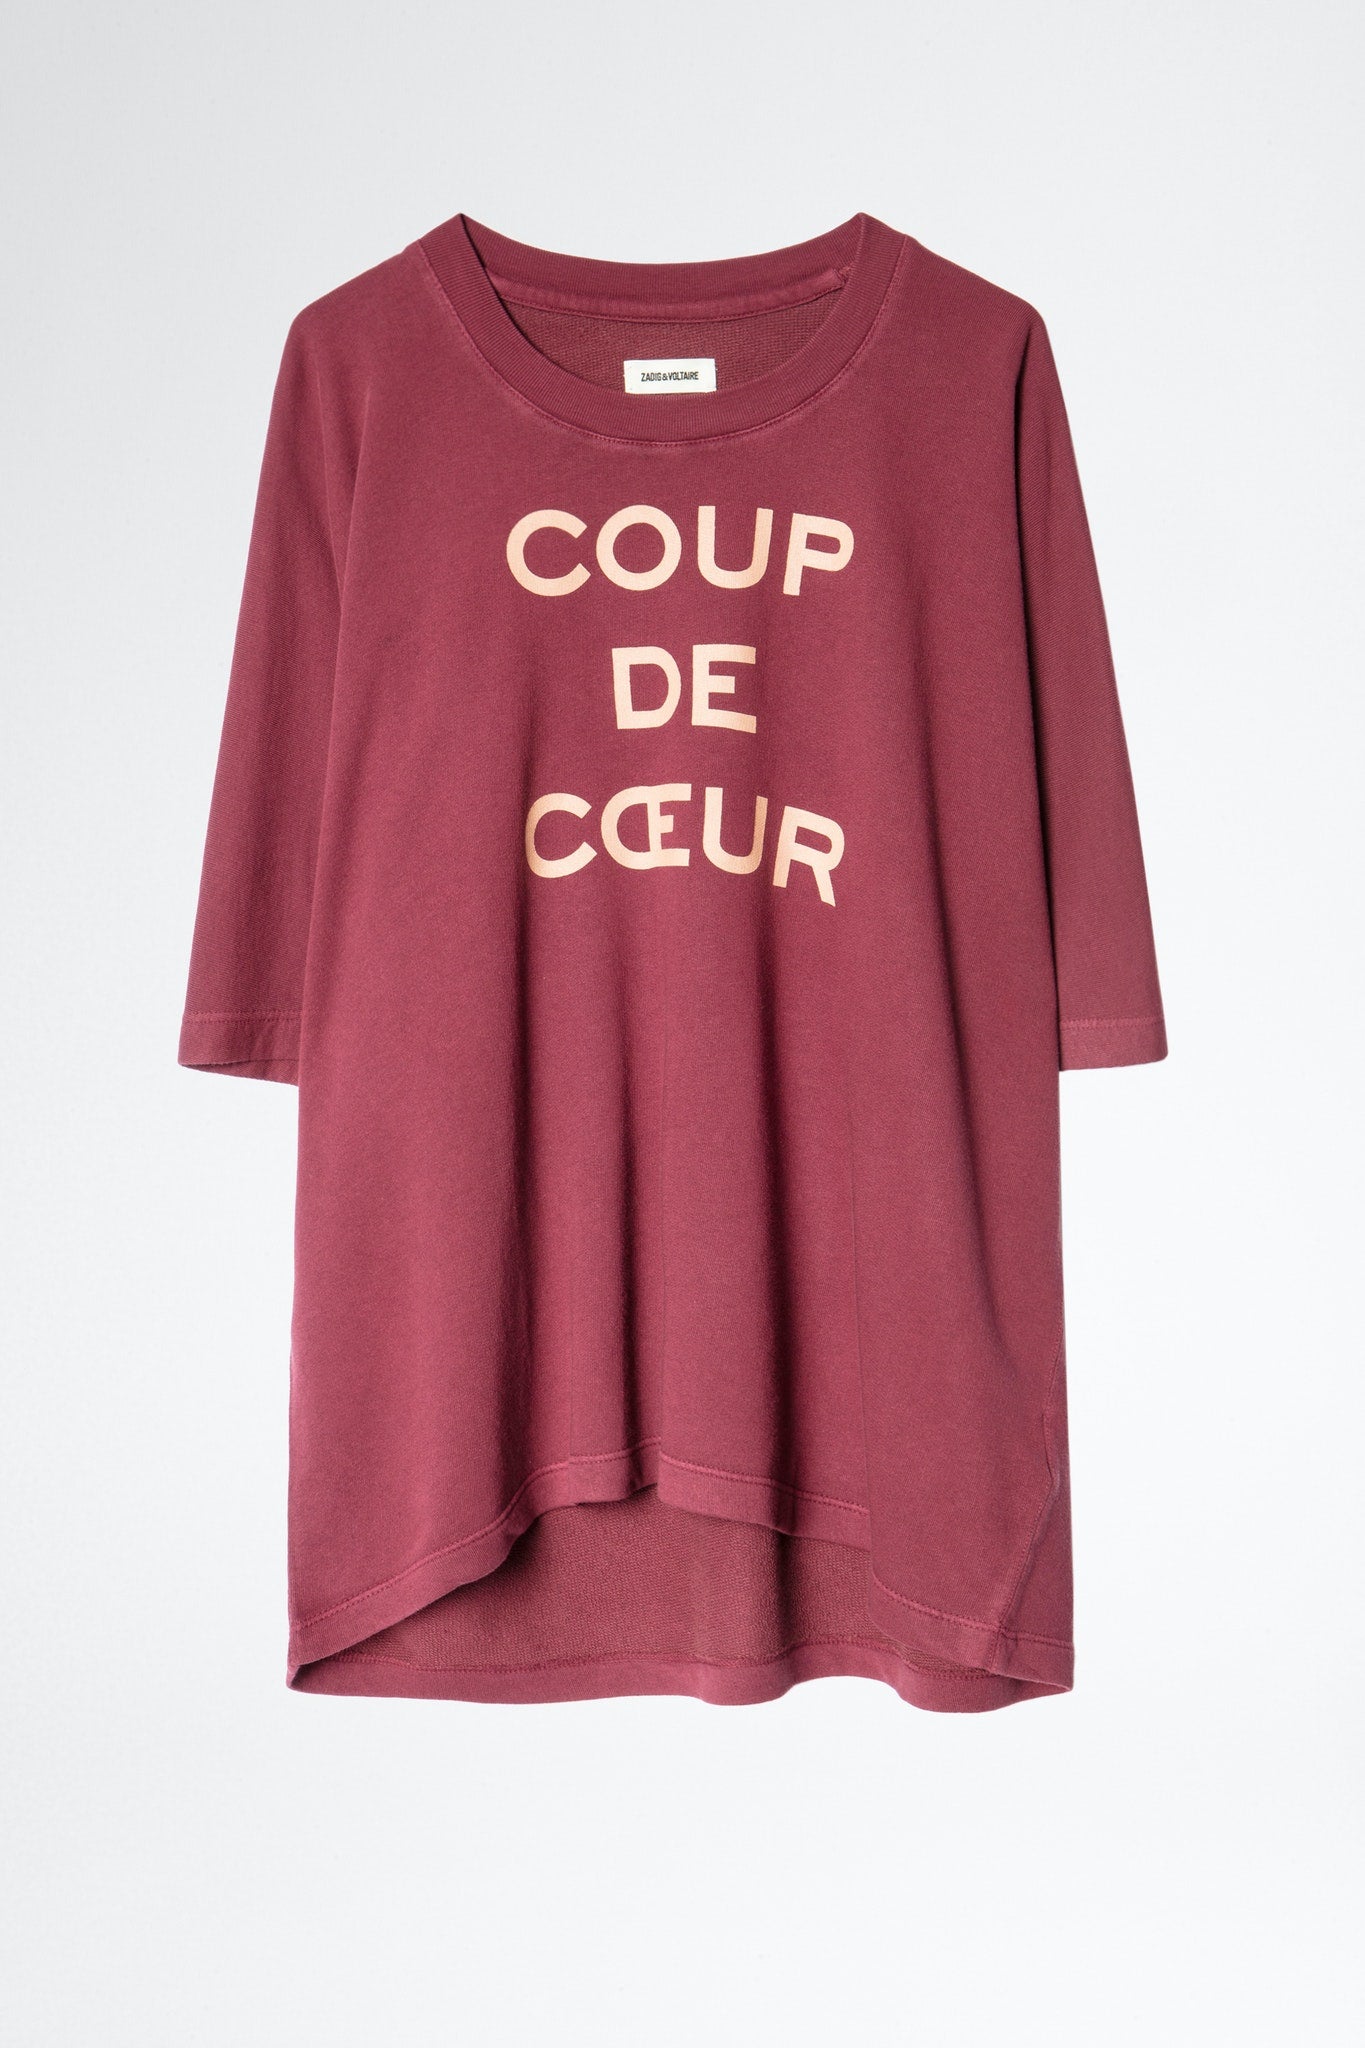 Zadig & Voltaire Portland Coup de Coeur Sweatshirt Top